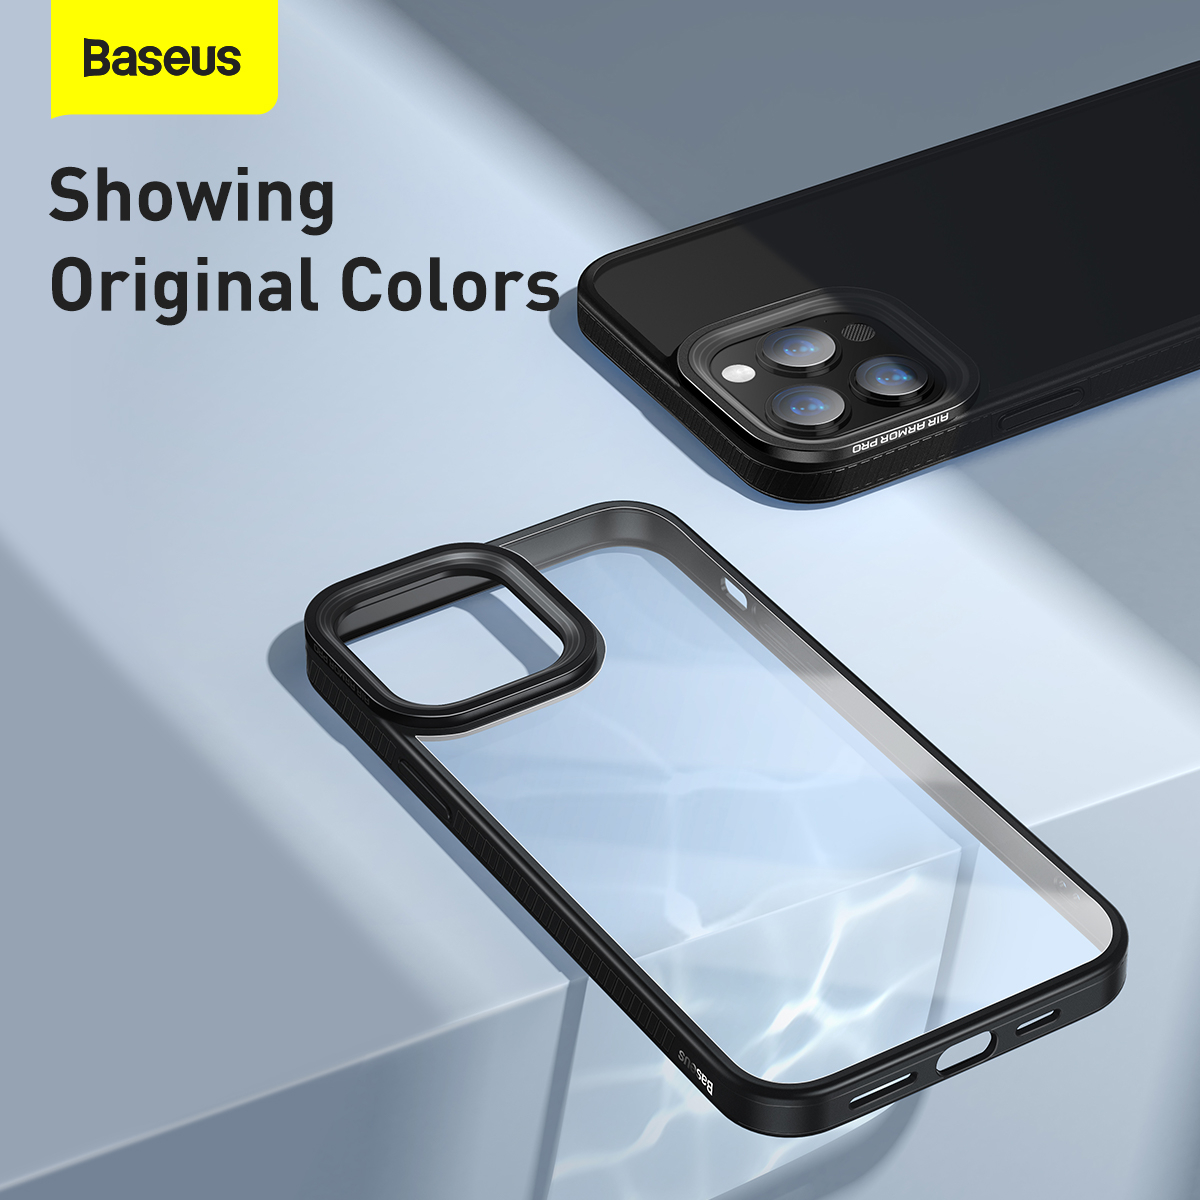 Baseus Crystal mobilskal till iPhone 13 Pro Max, svart